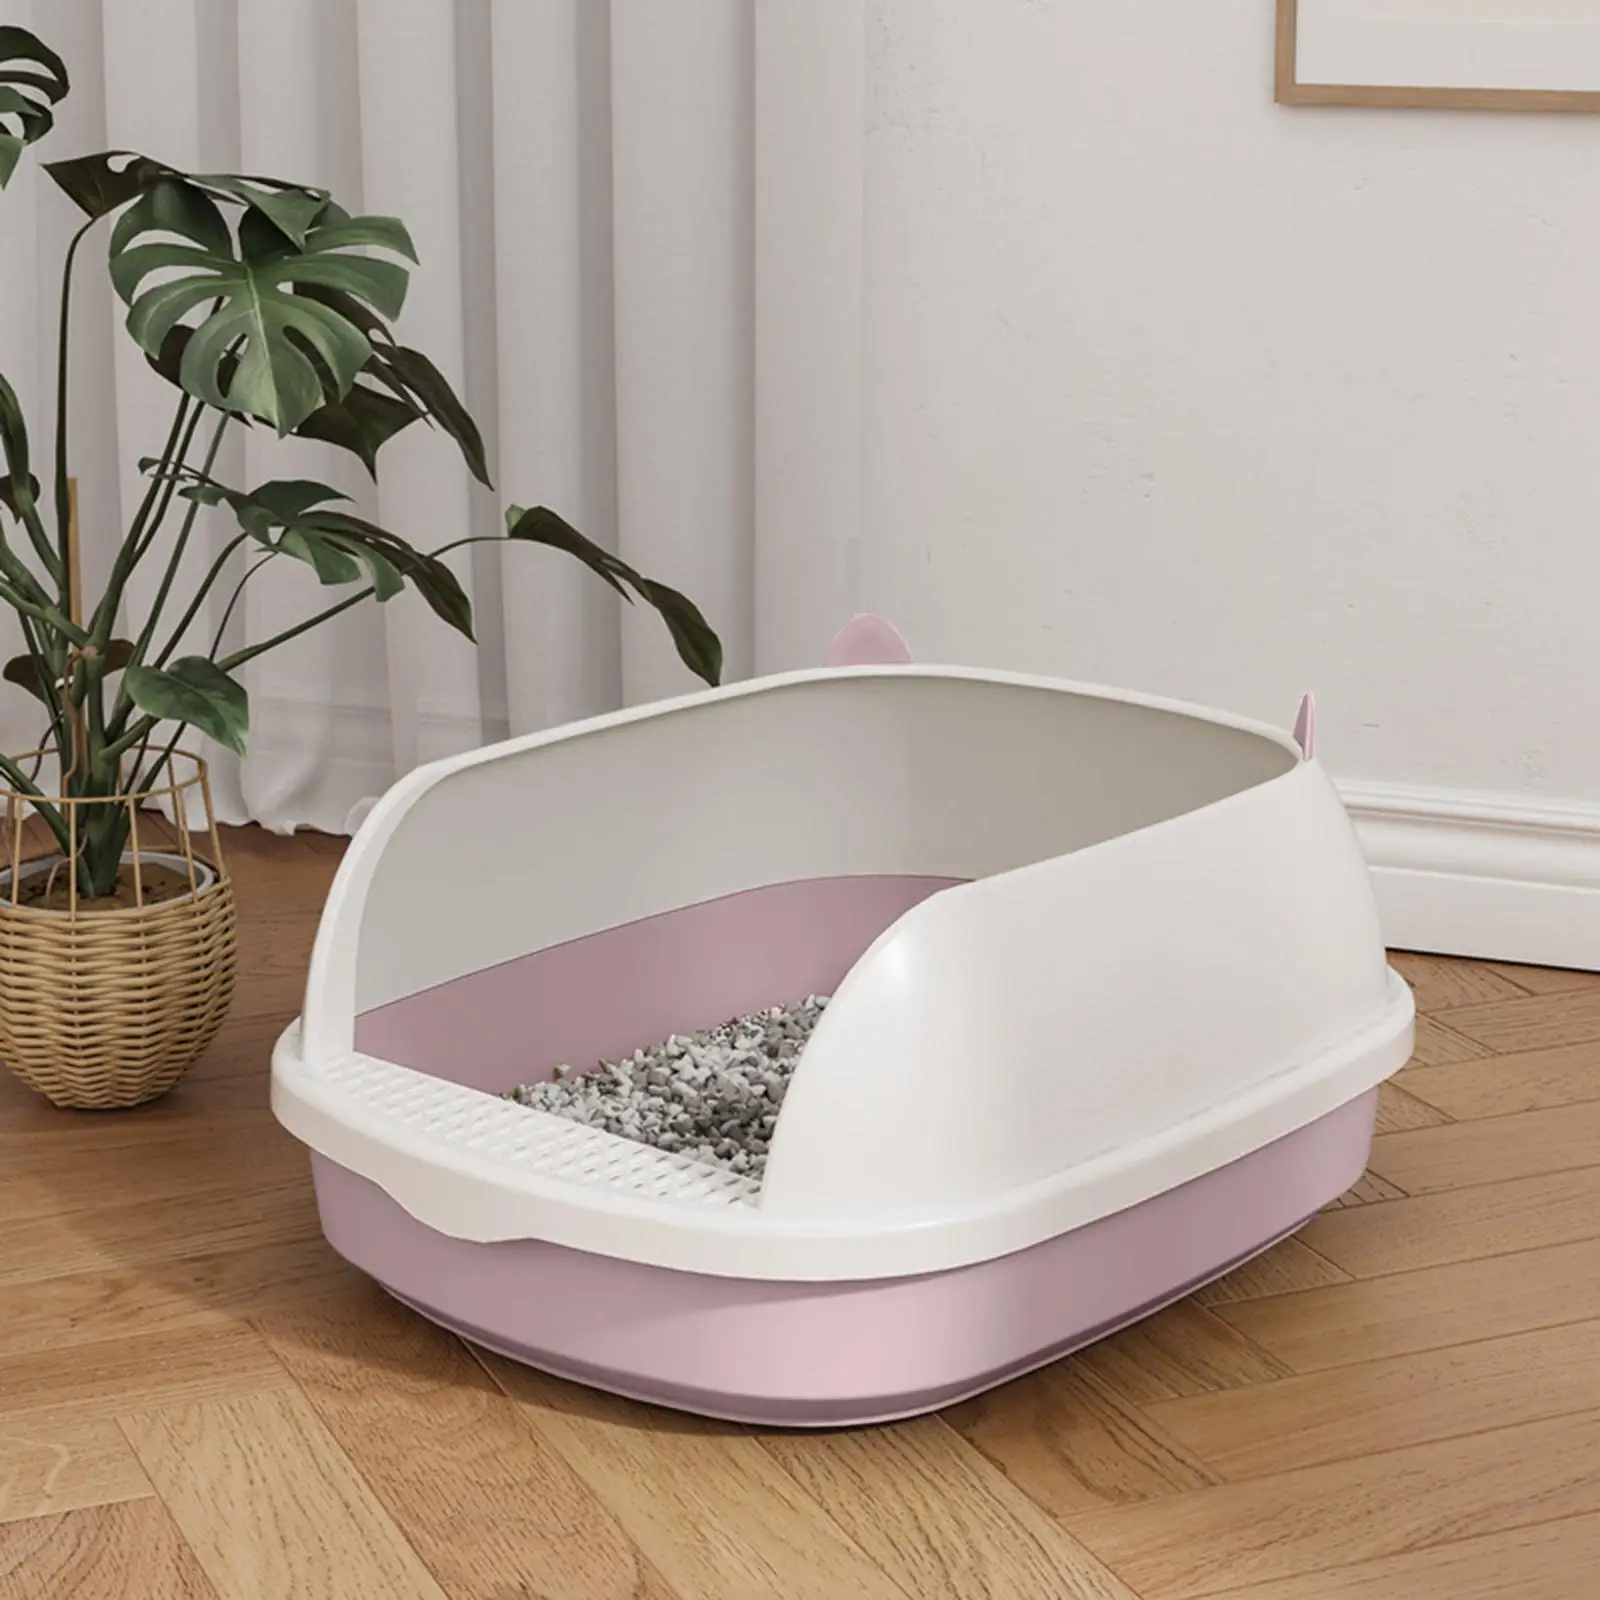 Cat Potty Toilet Pan Durable Semi Enclosed Sandbox Portable Pet Litter Tray Cat Bedpan for Travel Kitten Pet Supplies Rabbit